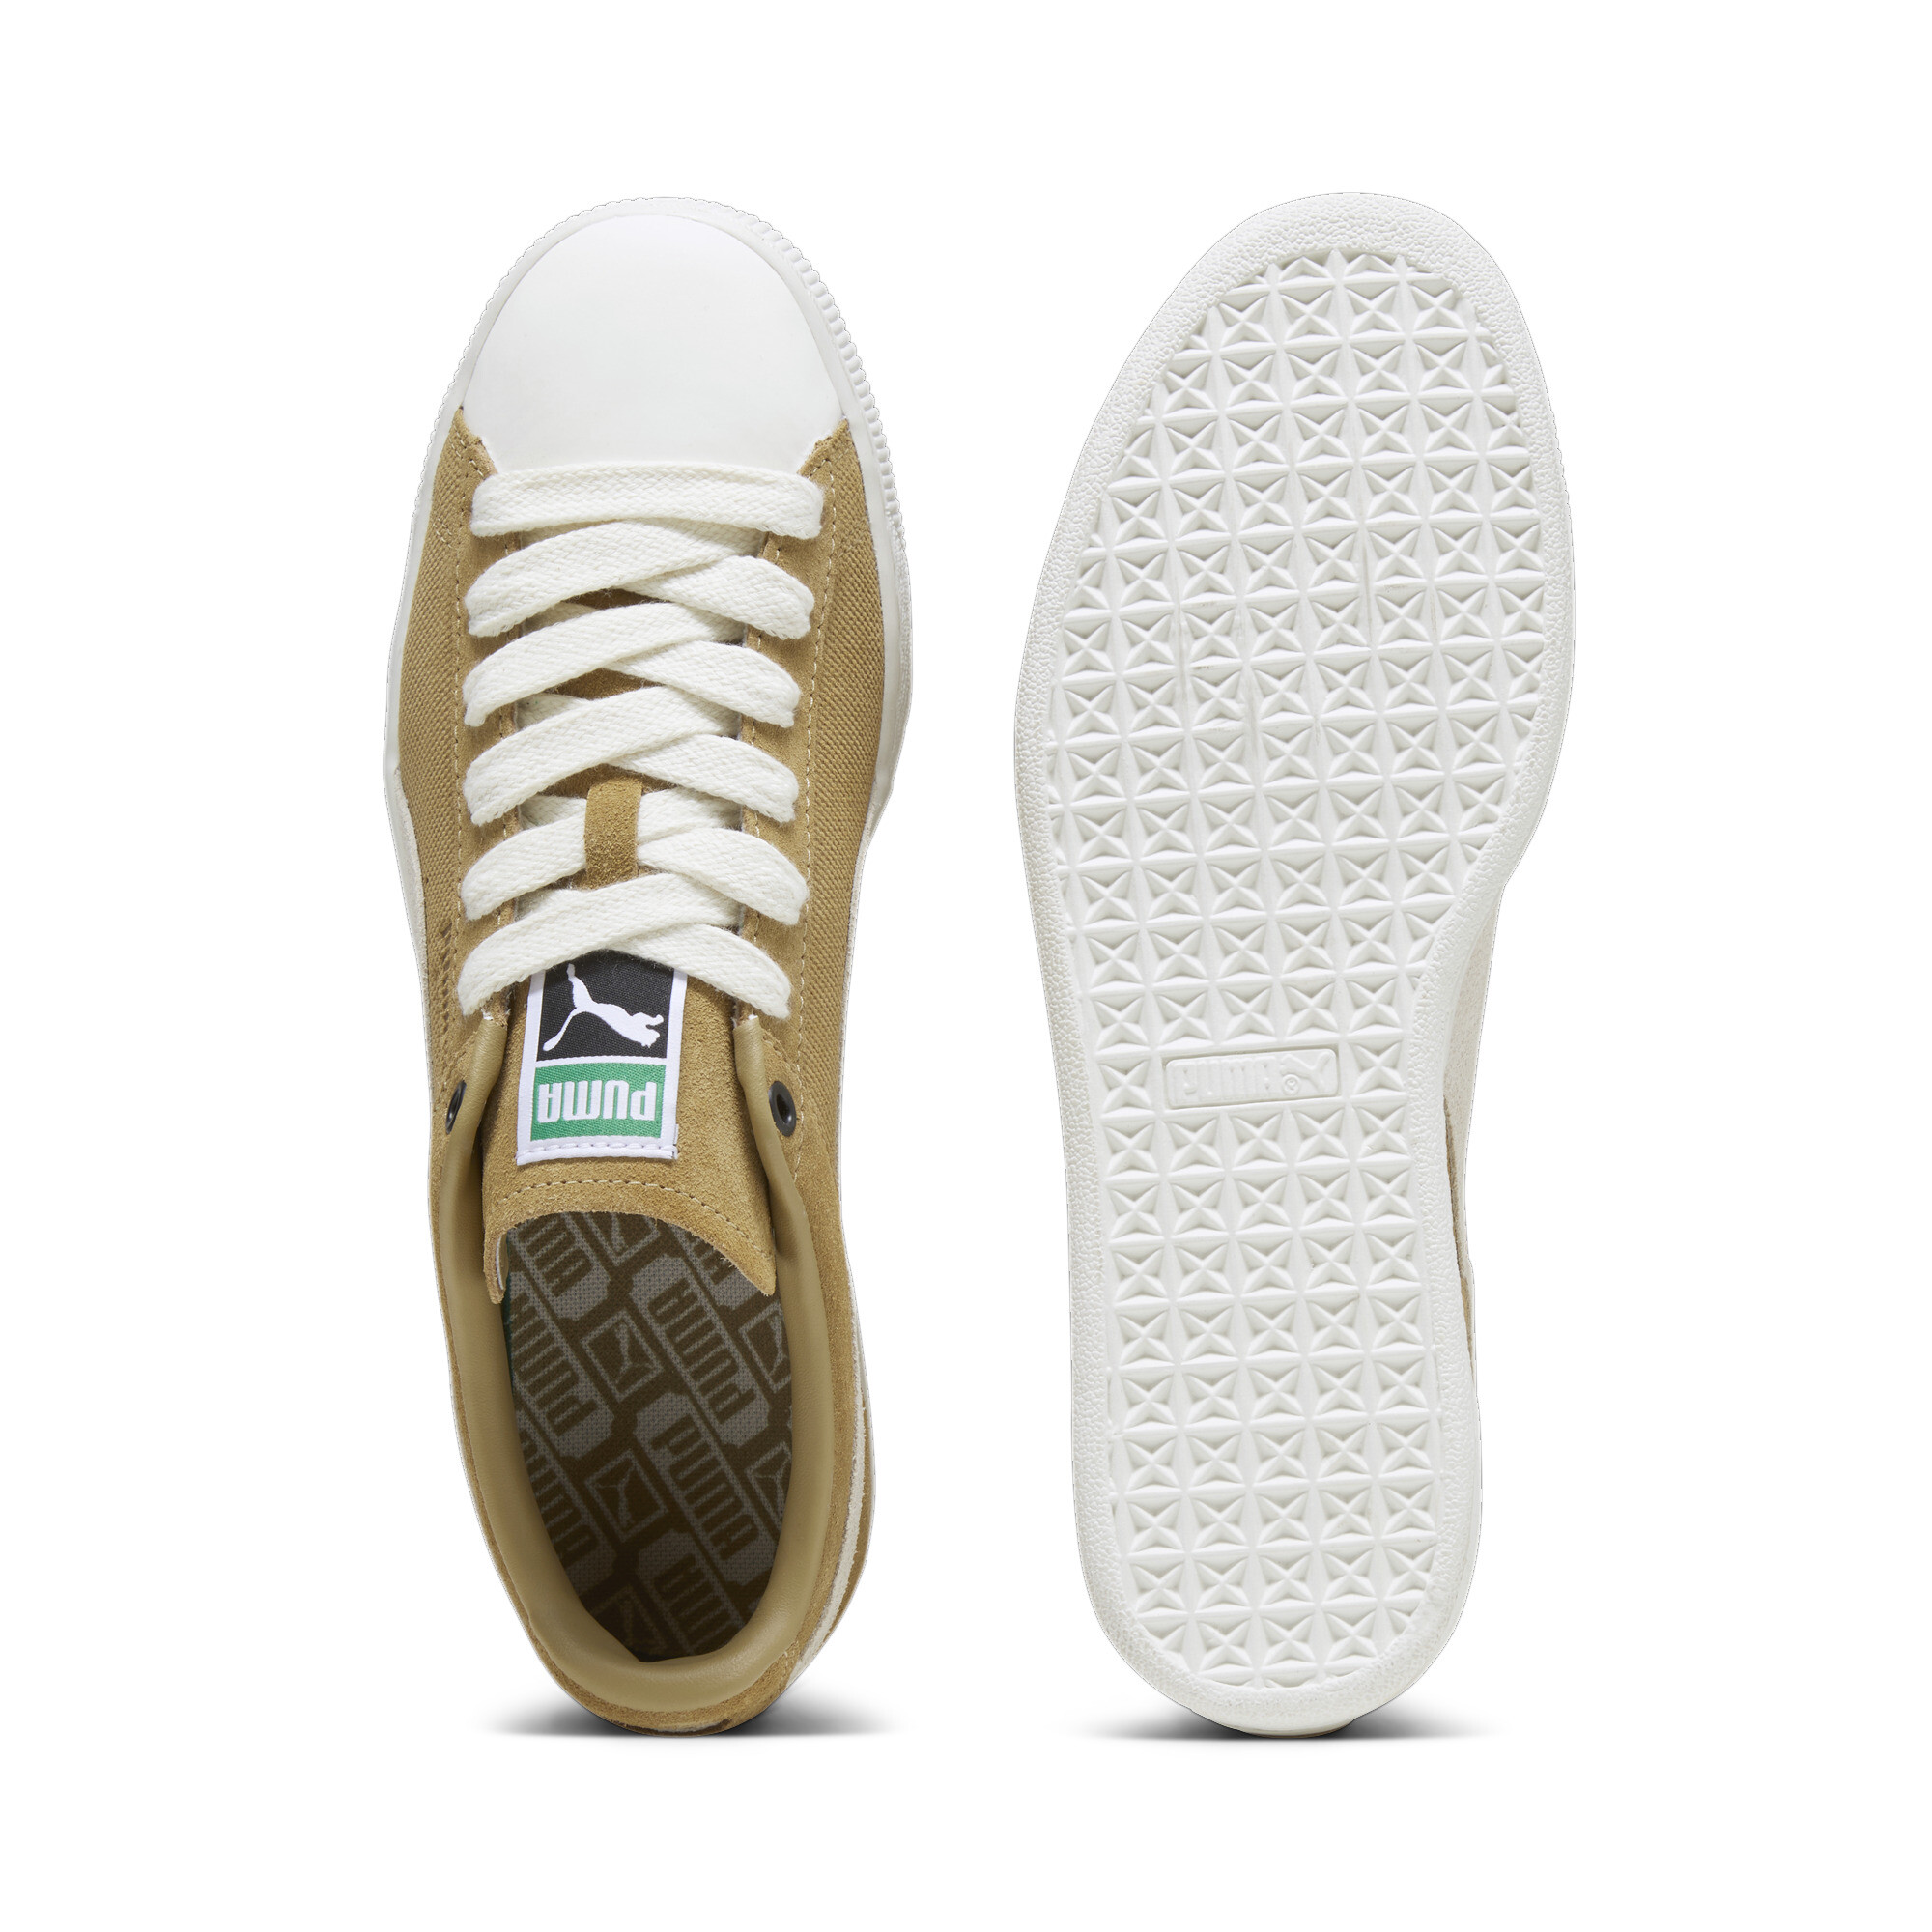 Men's PUMA Suede Hike Sneakers In Beige, Size EU 40.5